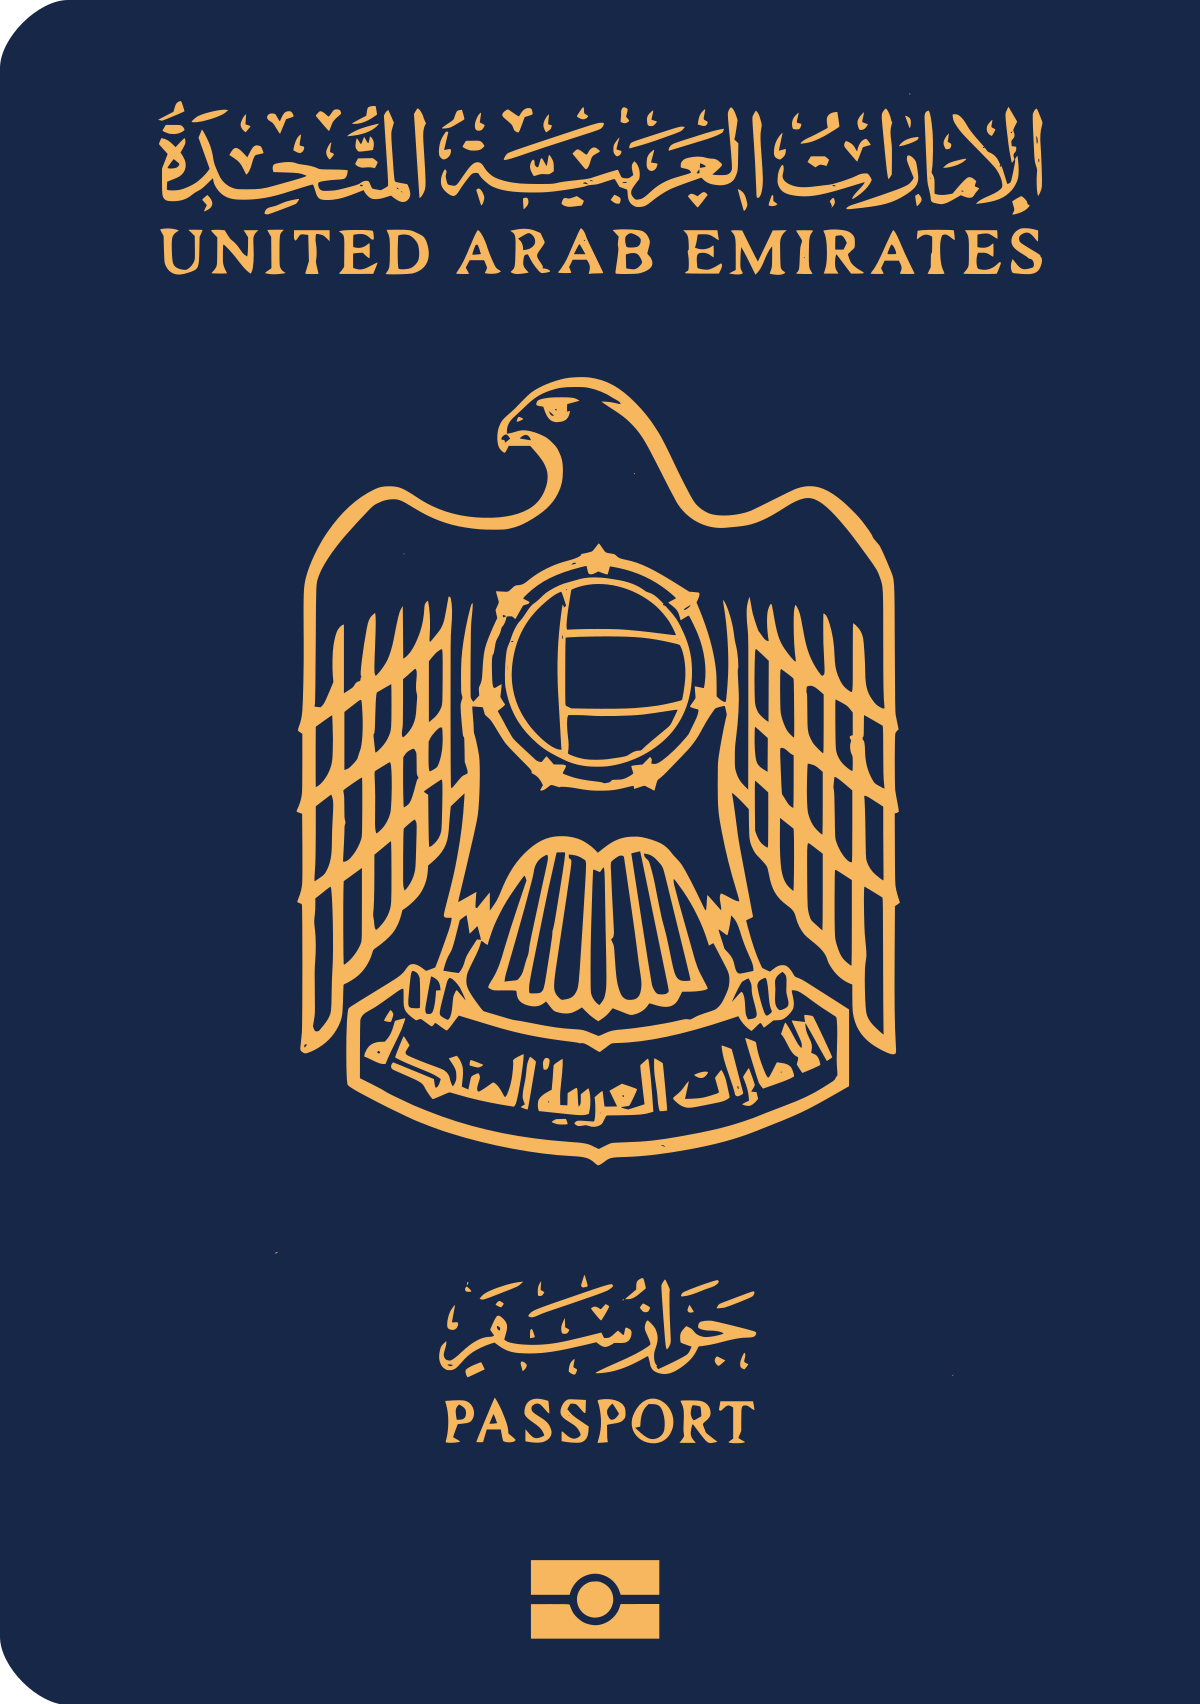 Dubai Passport Holder – Side Note